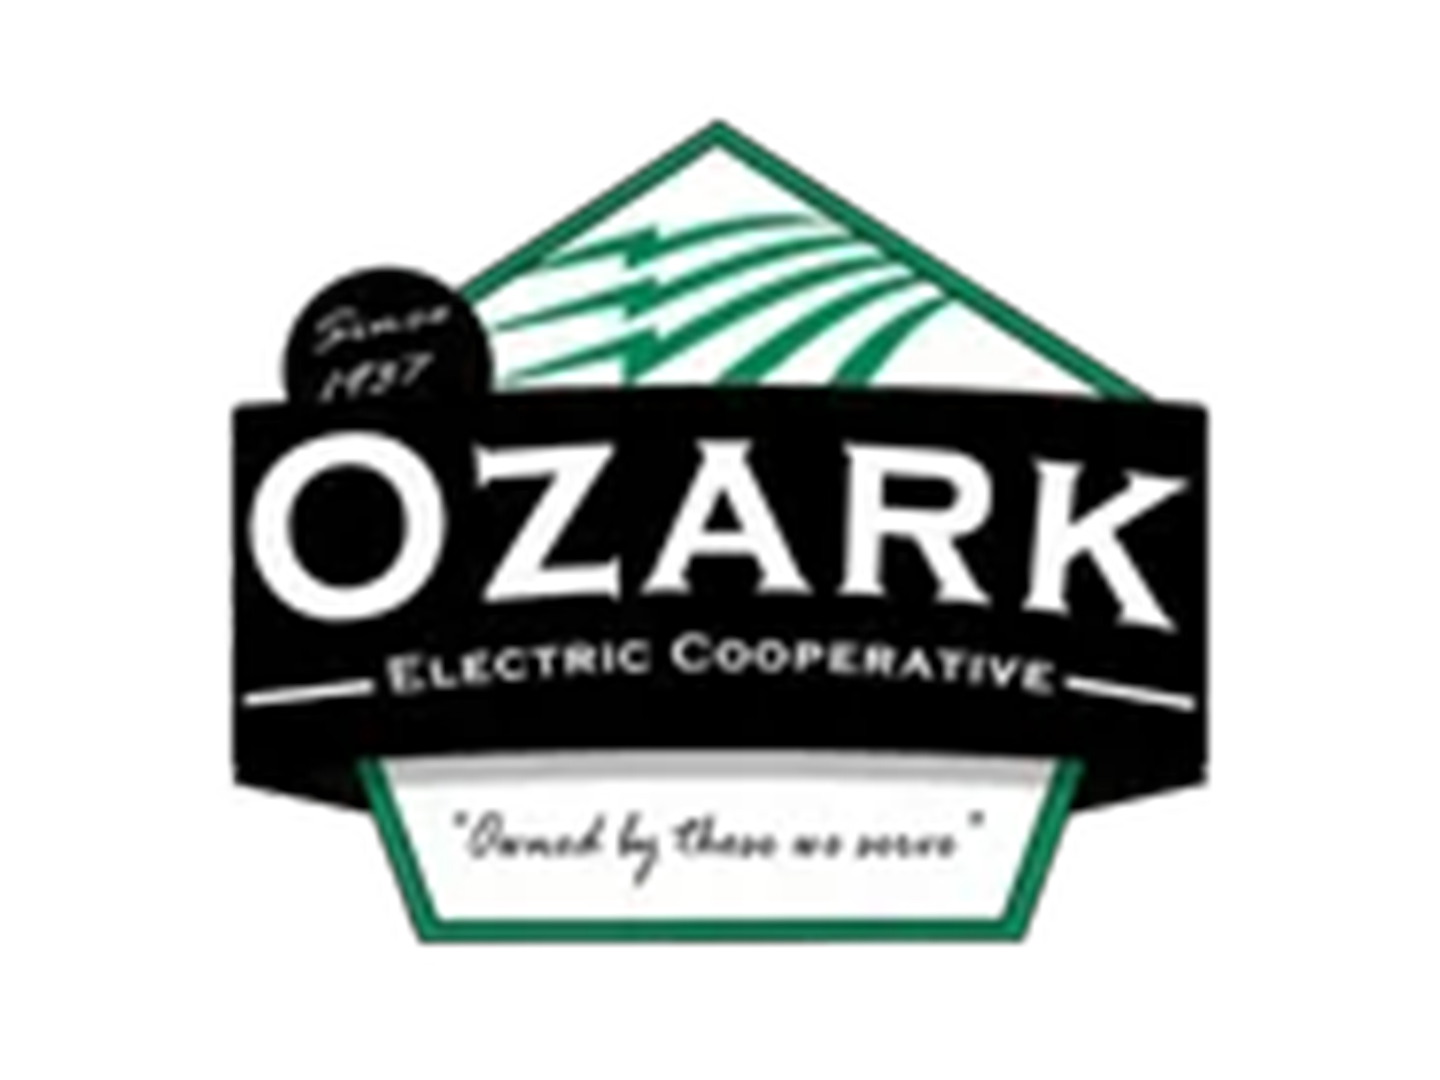 Ozark EC